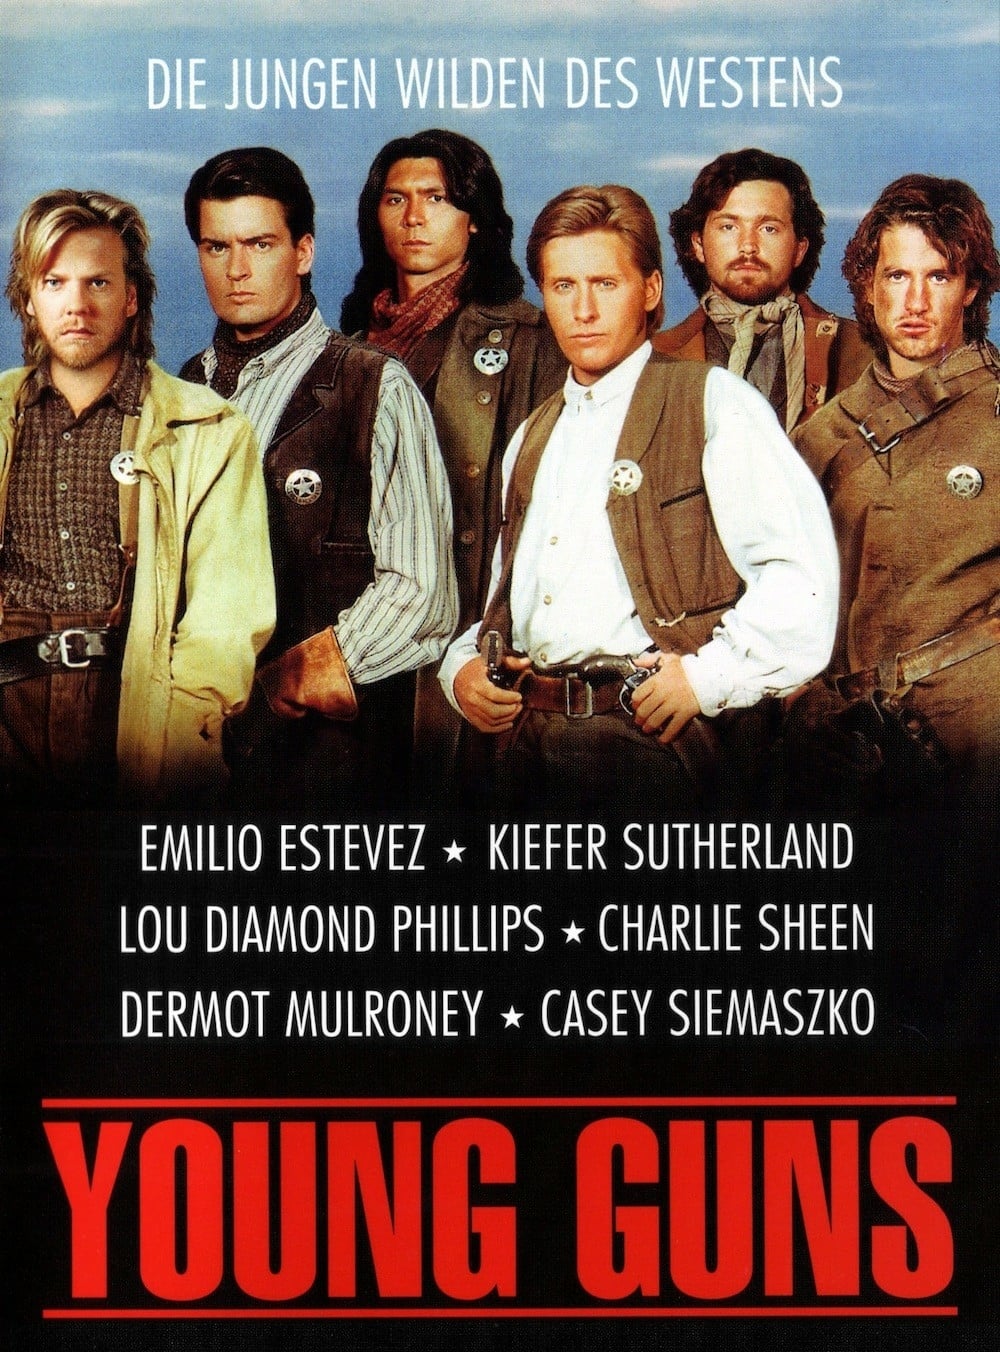 Plakat von "Young Guns"